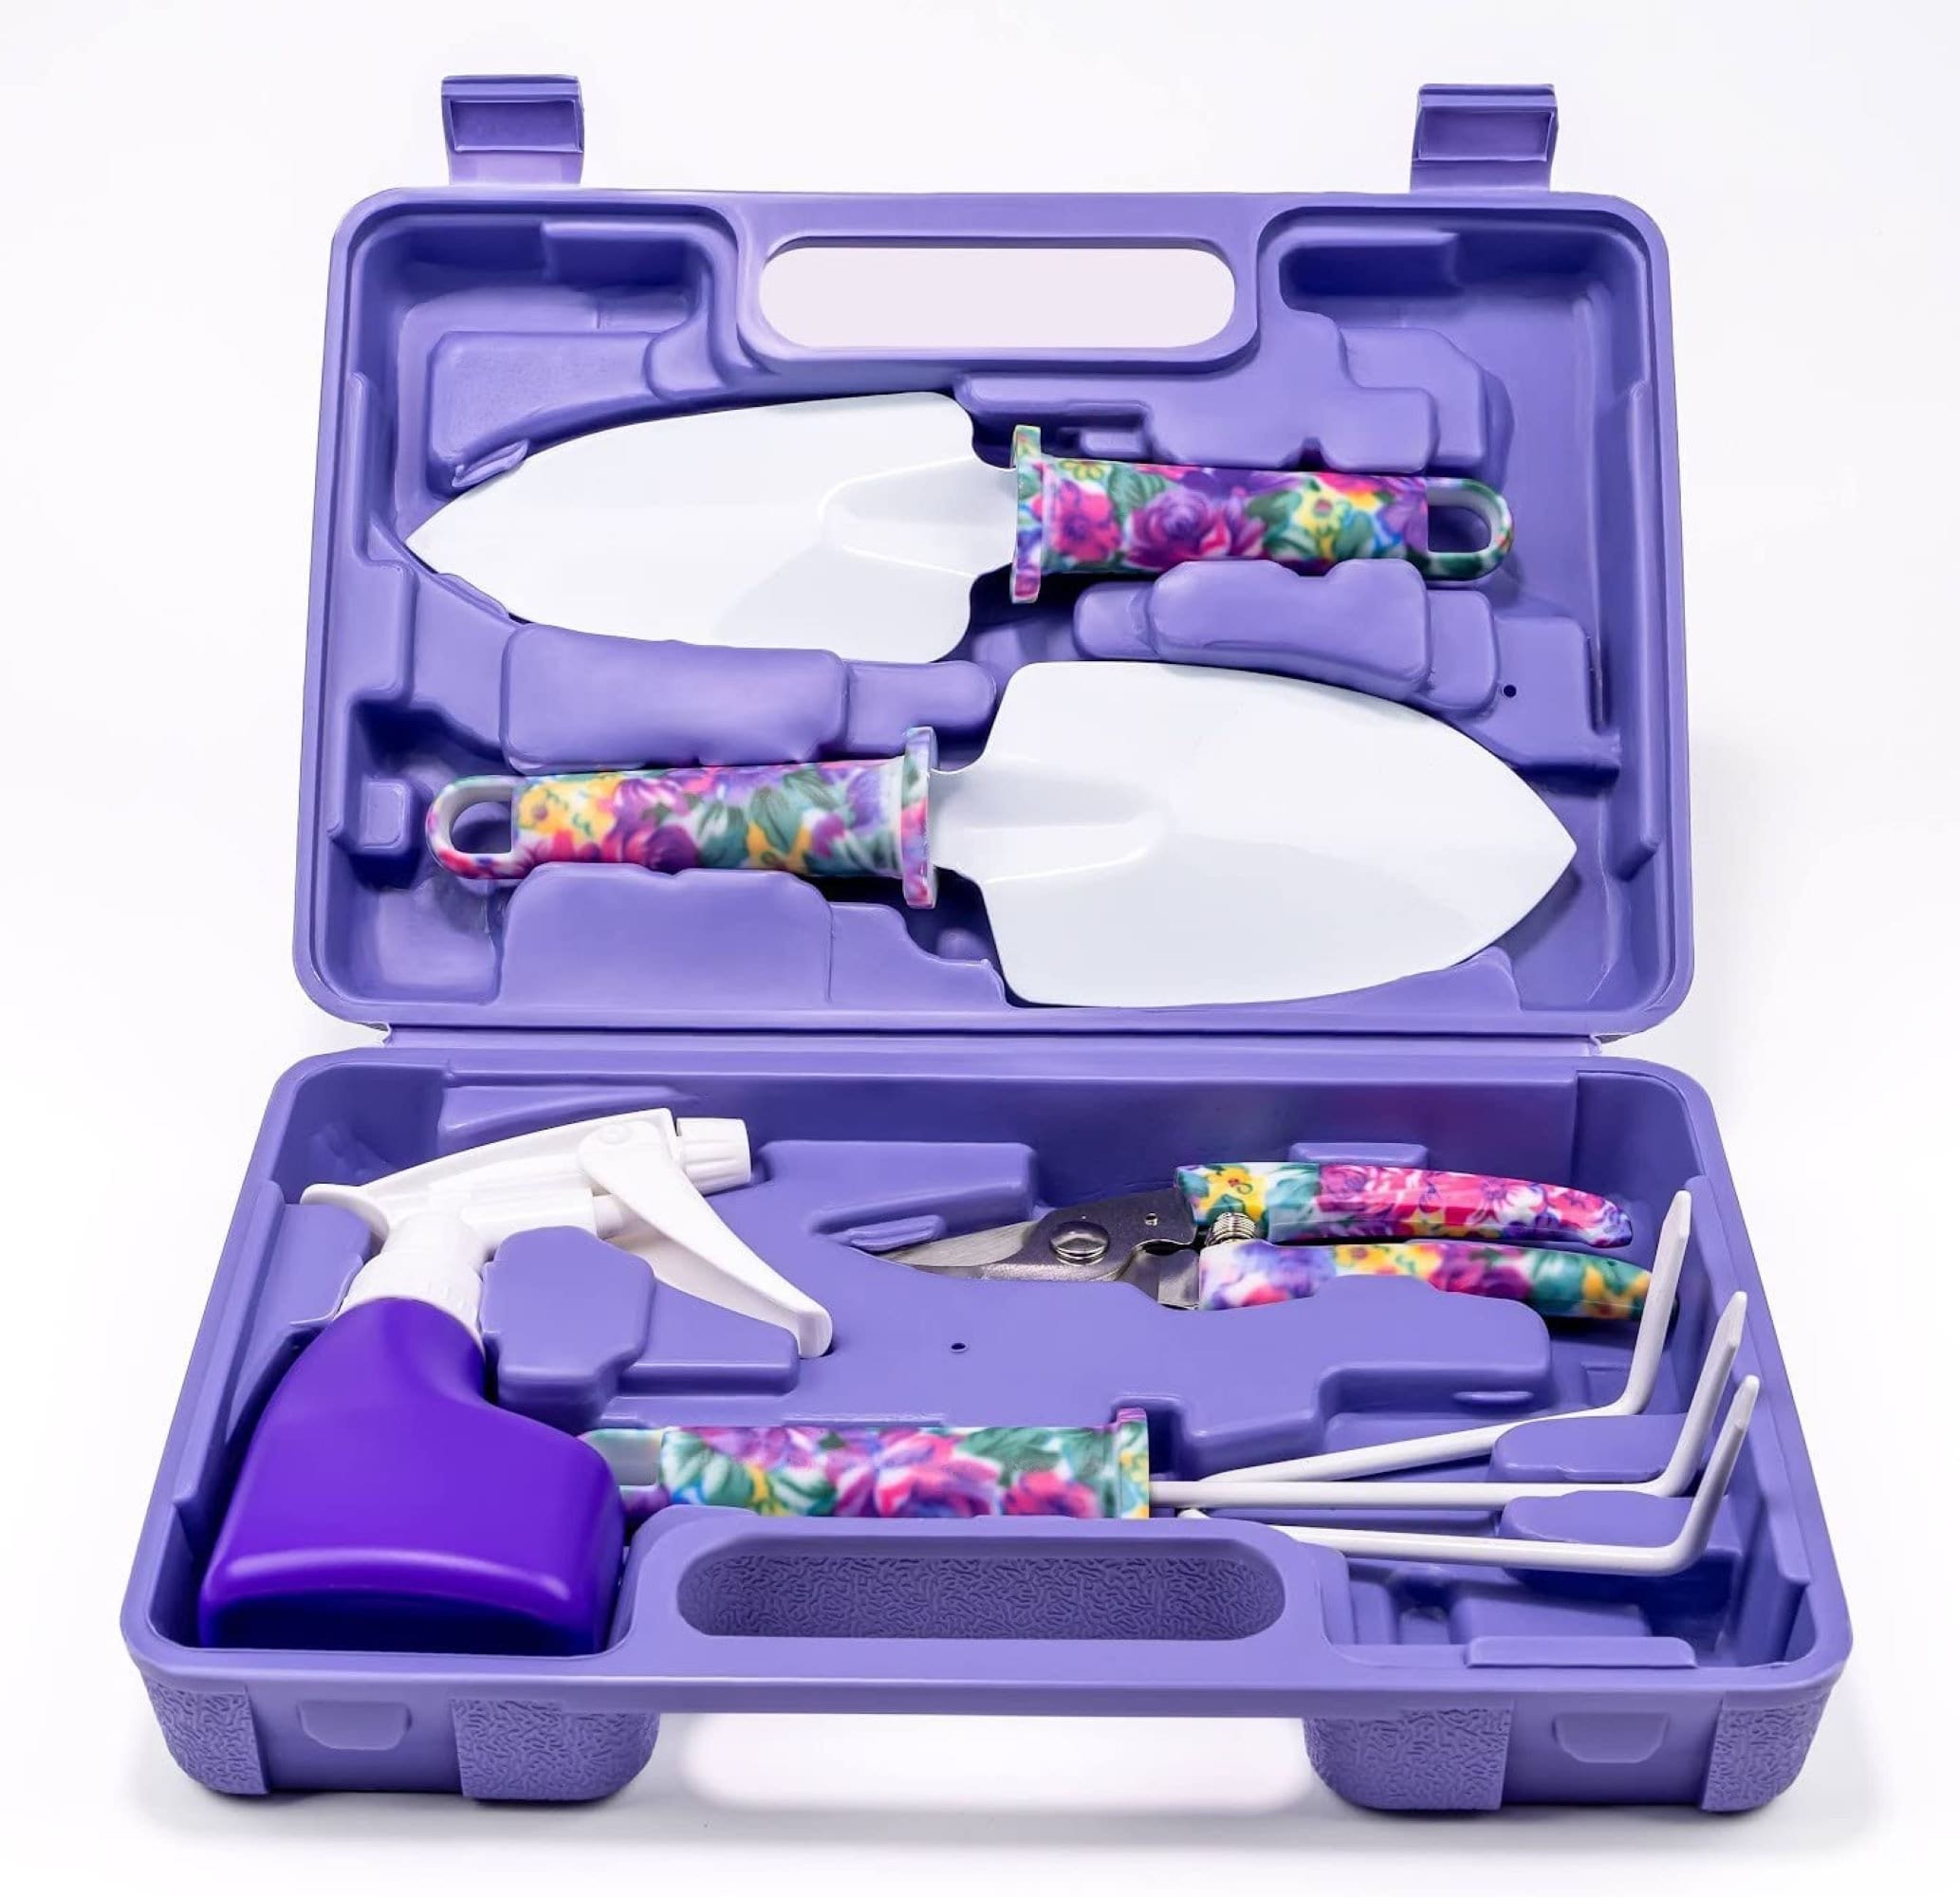 Cloflo 5-piece Garden Tool Set With Purple Carrying Case